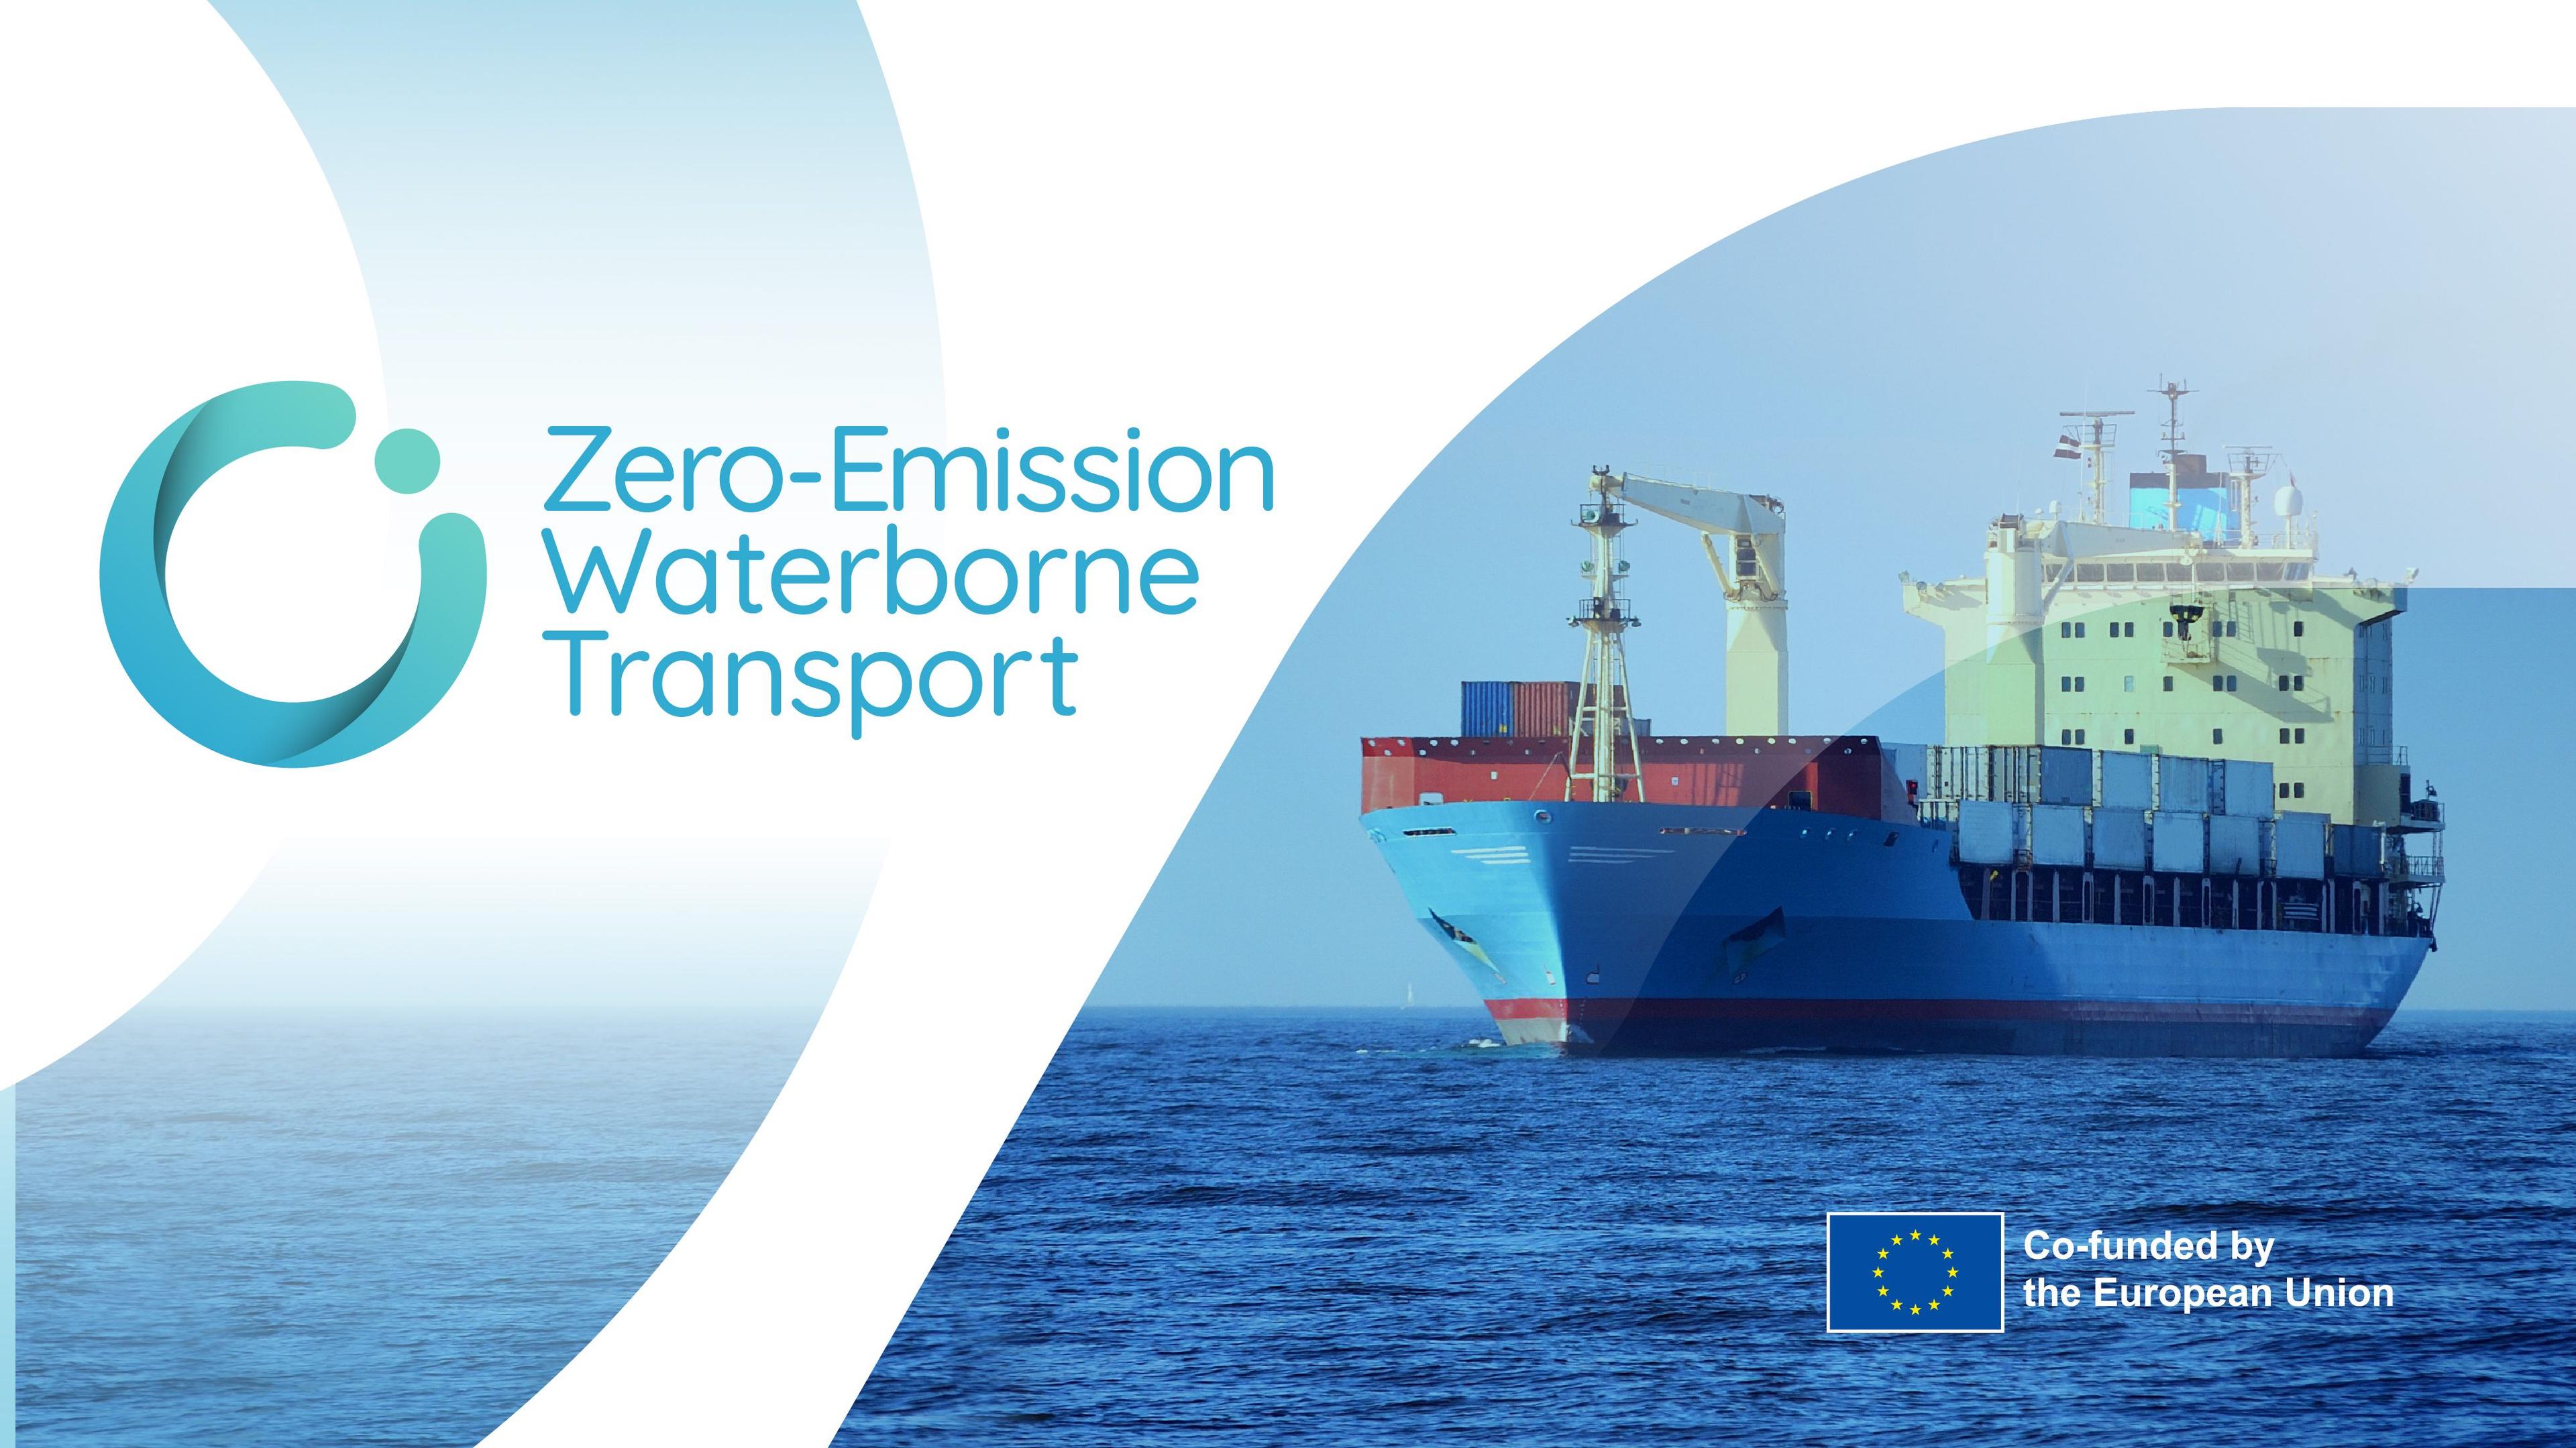 Zero-Emission Waterborne Transport